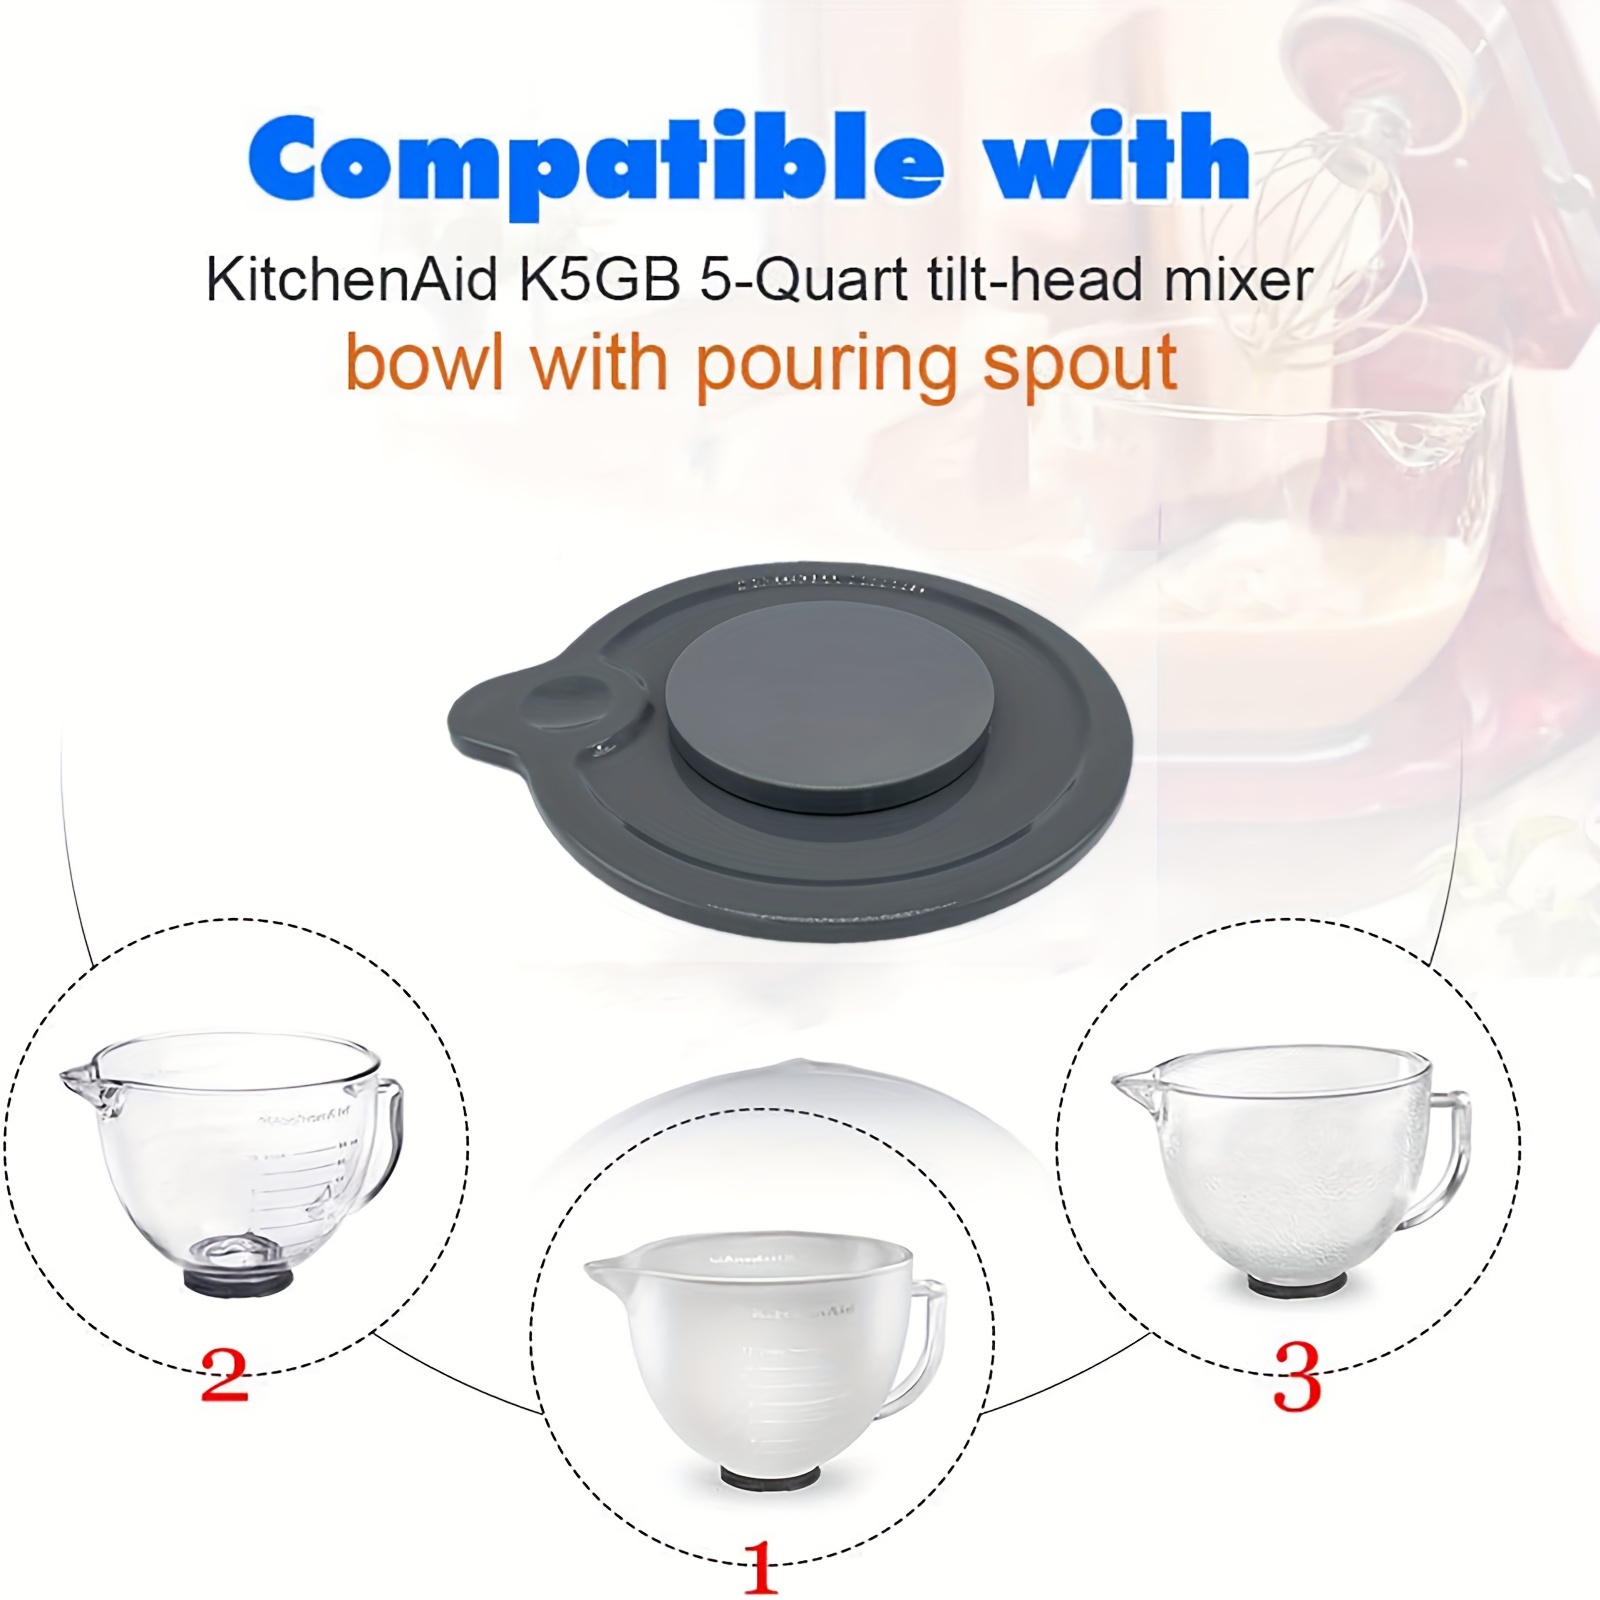  Mixer Bowl Covers for KitchenAid 4.5-5 Qt Tilt-Head